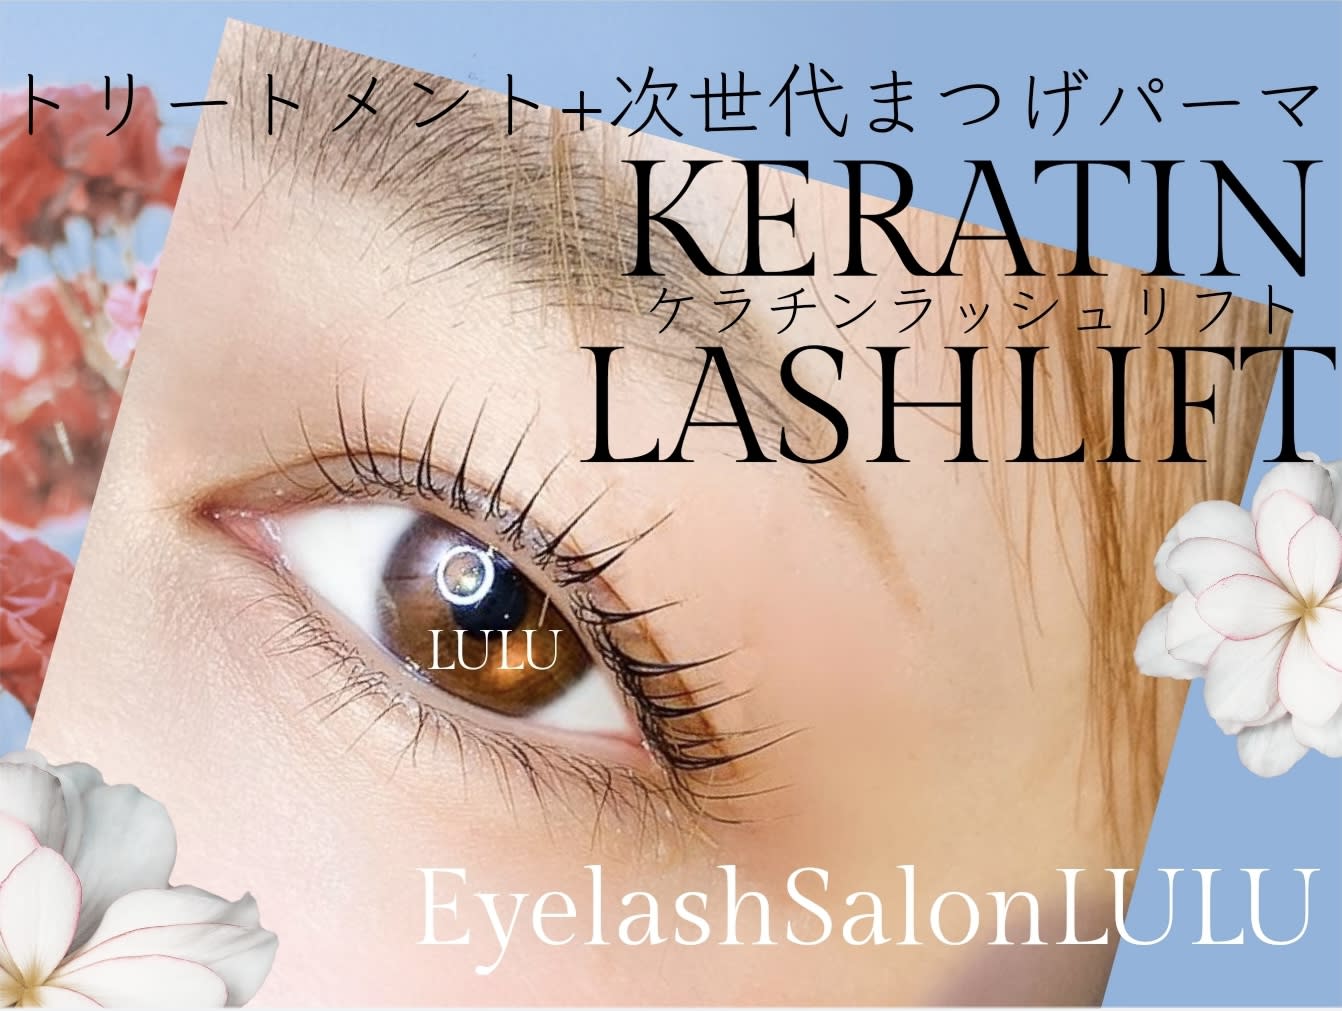 Eyelash Salon LULU 八事店のアイキャッチ画像